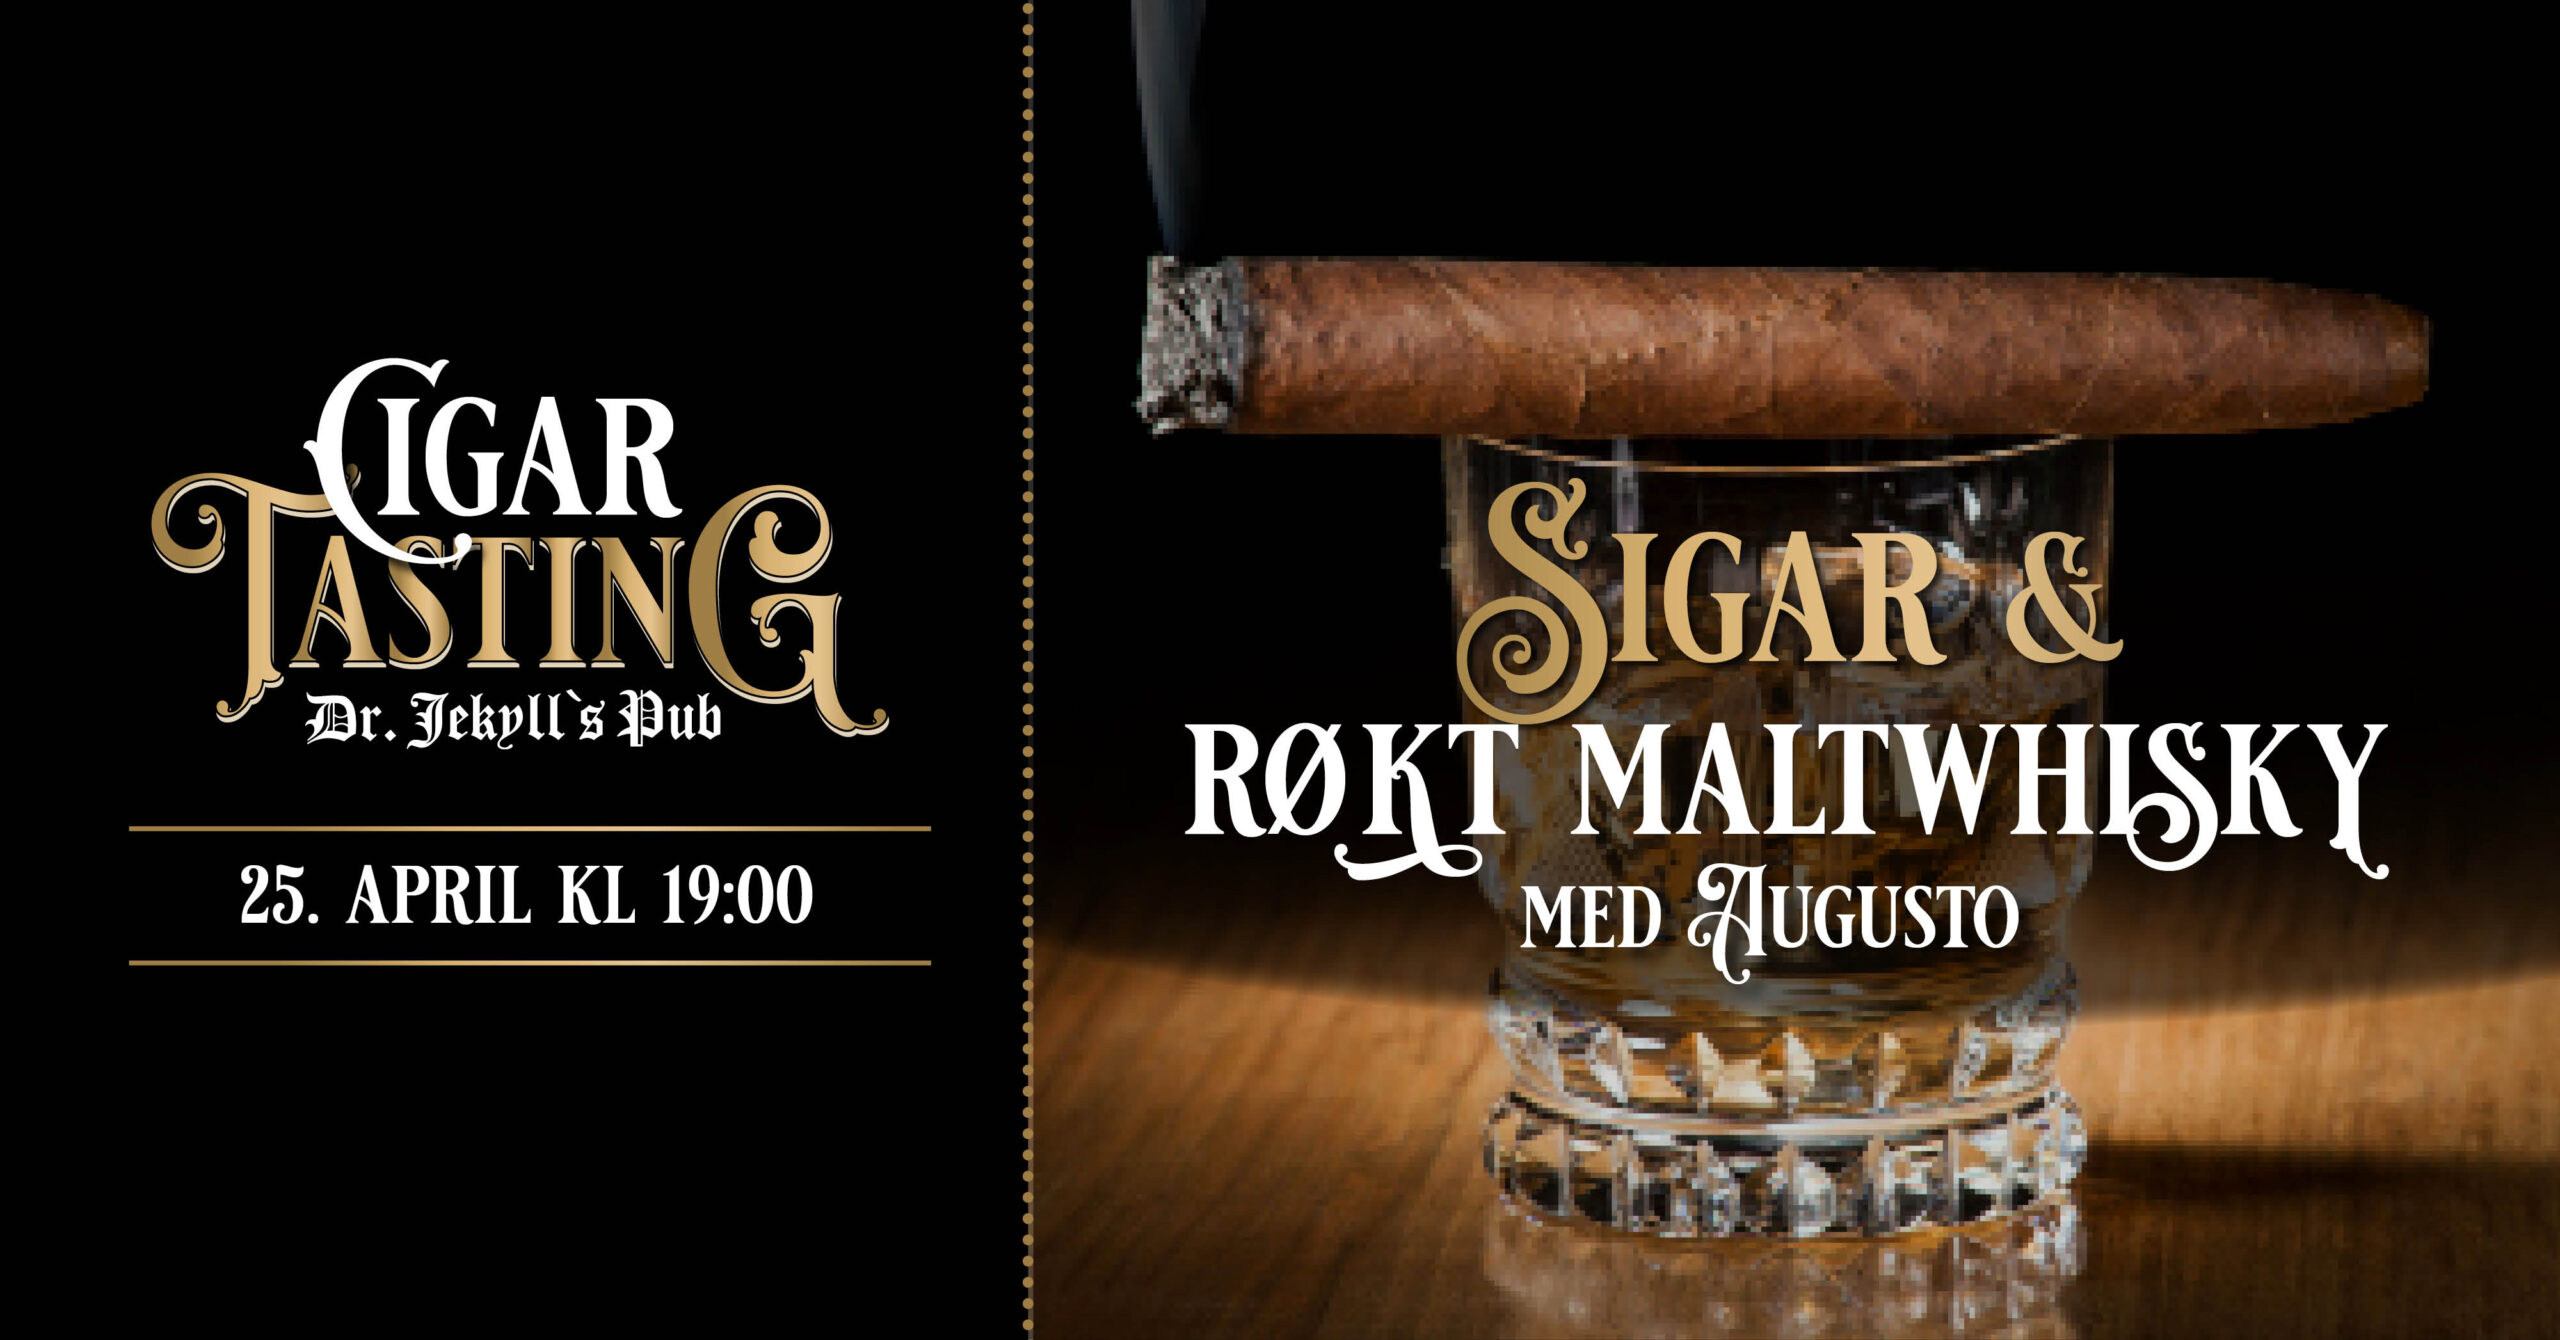 Cigar og Røkt maltwhisky smaking